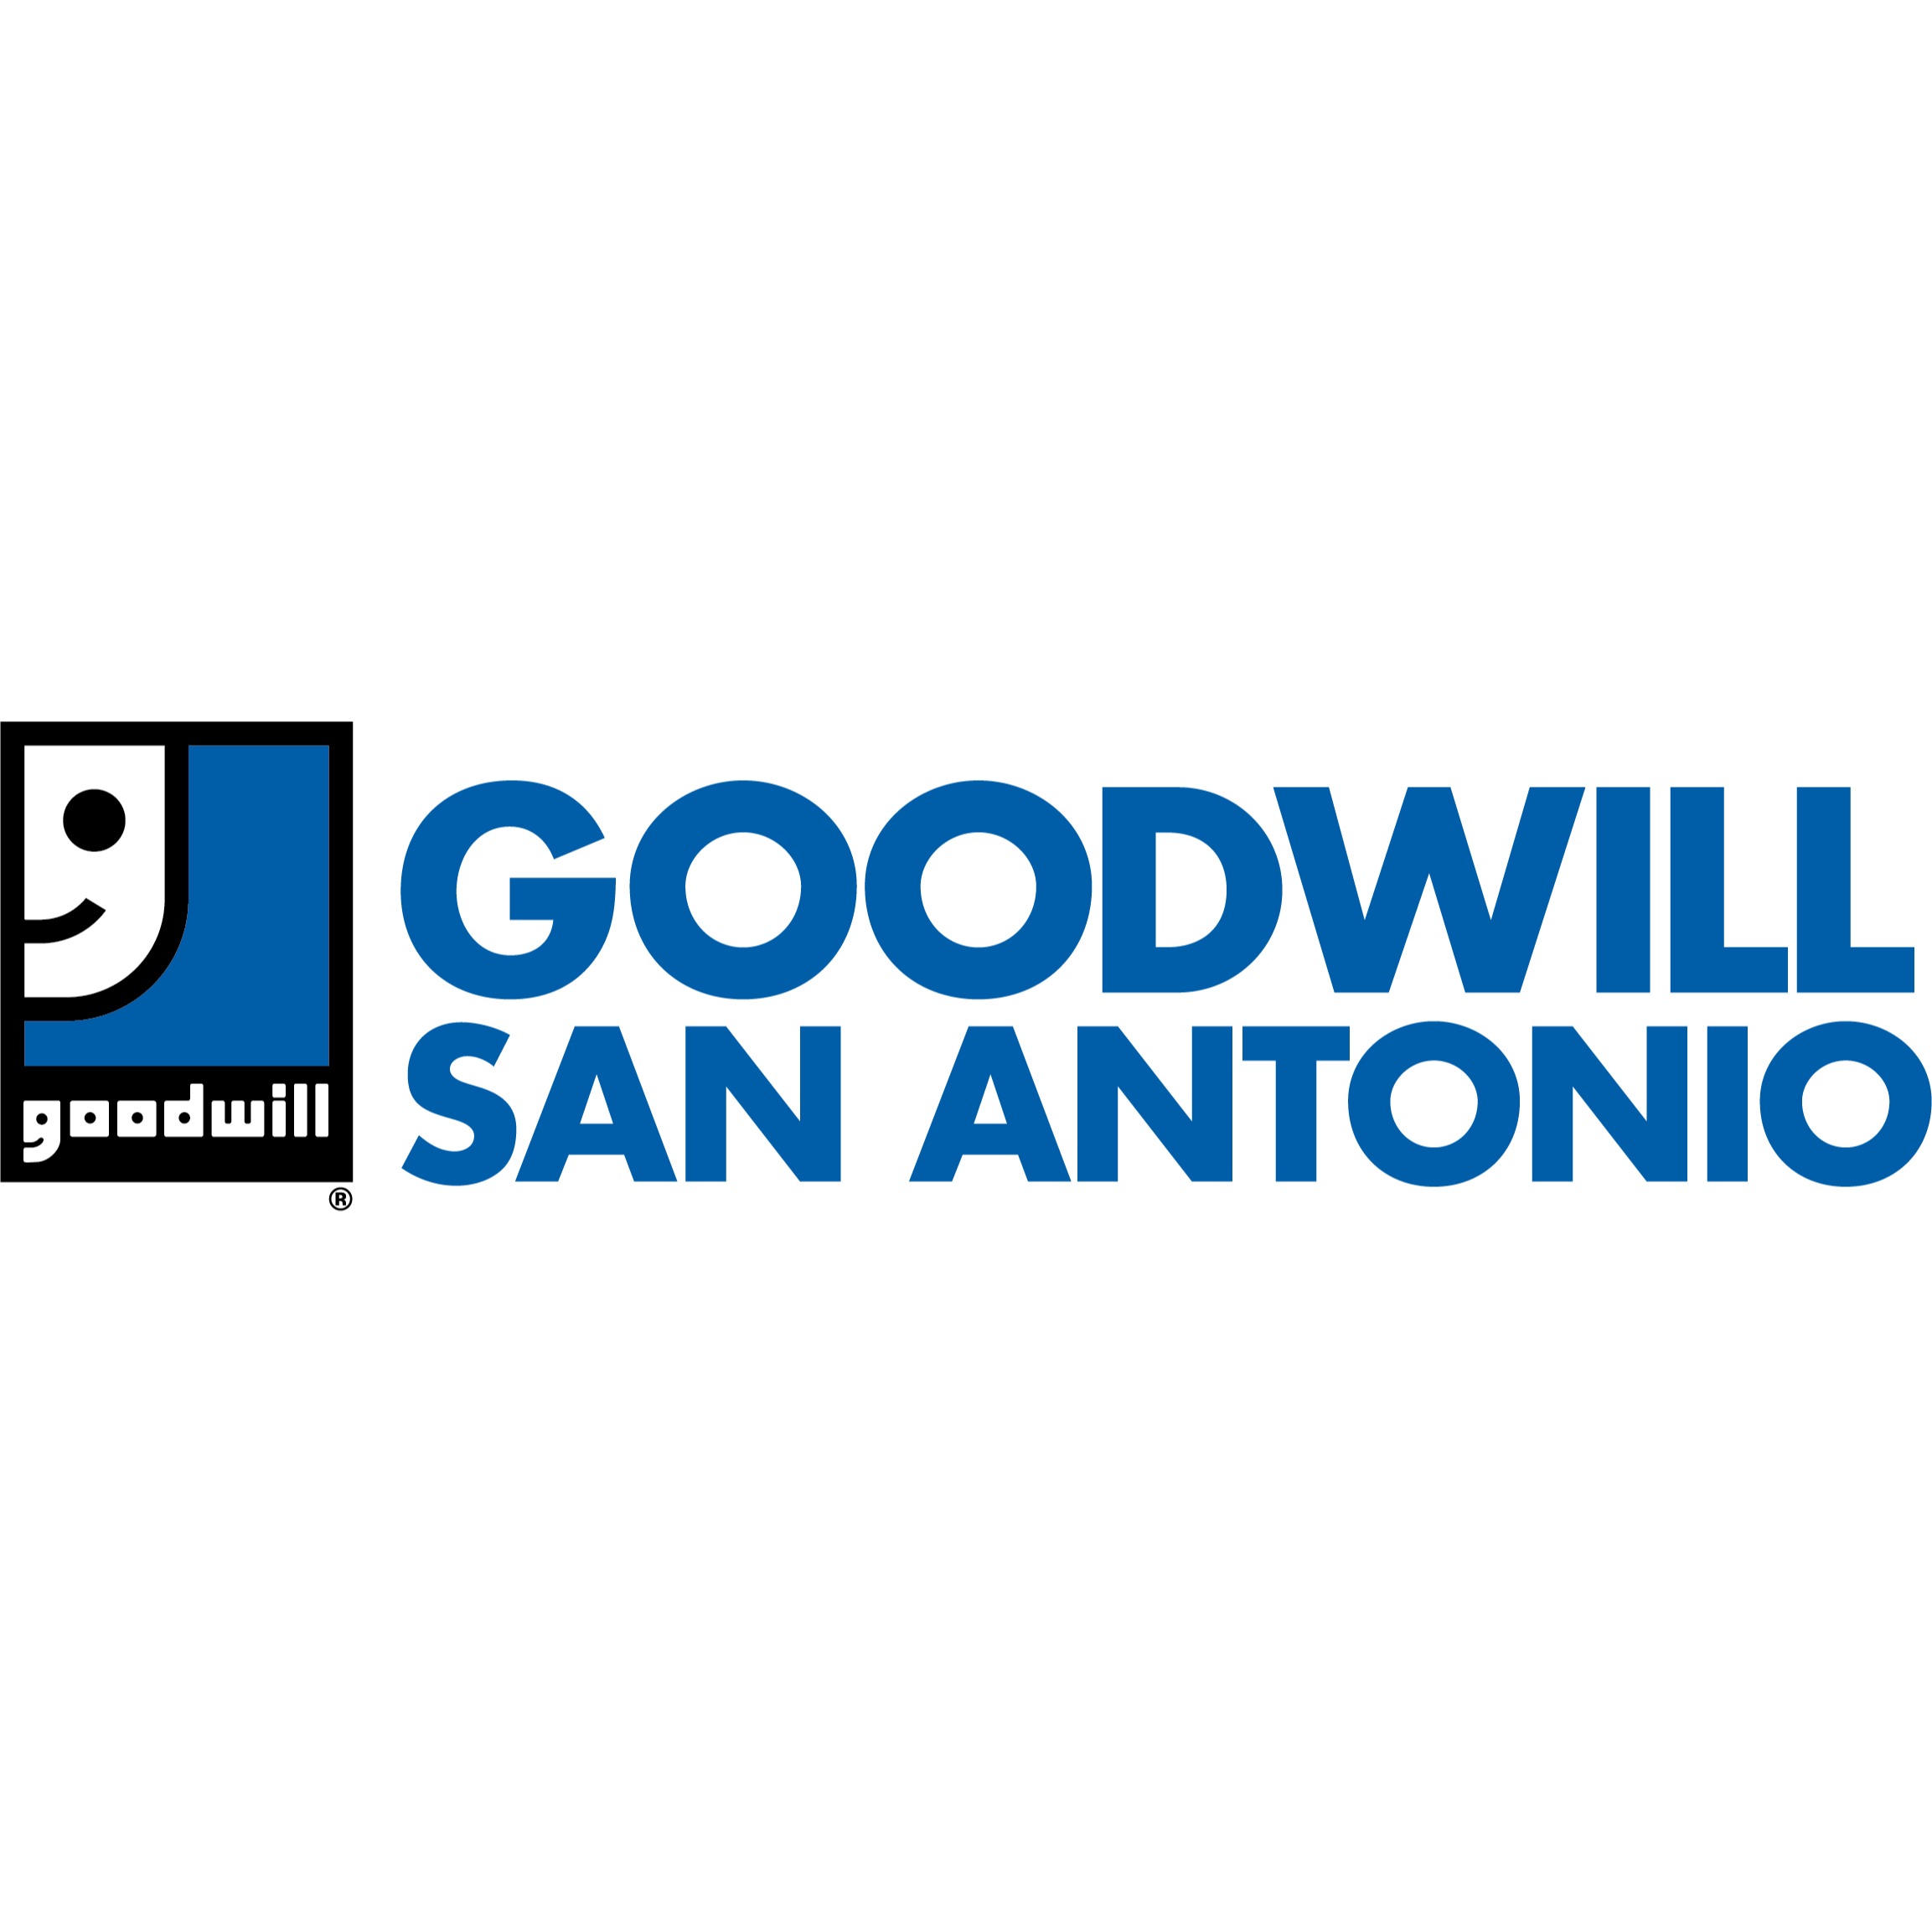 Goodwill Donation Station - San Antonio, TX 78260 - (210)924-8581 | ShowMeLocal.com